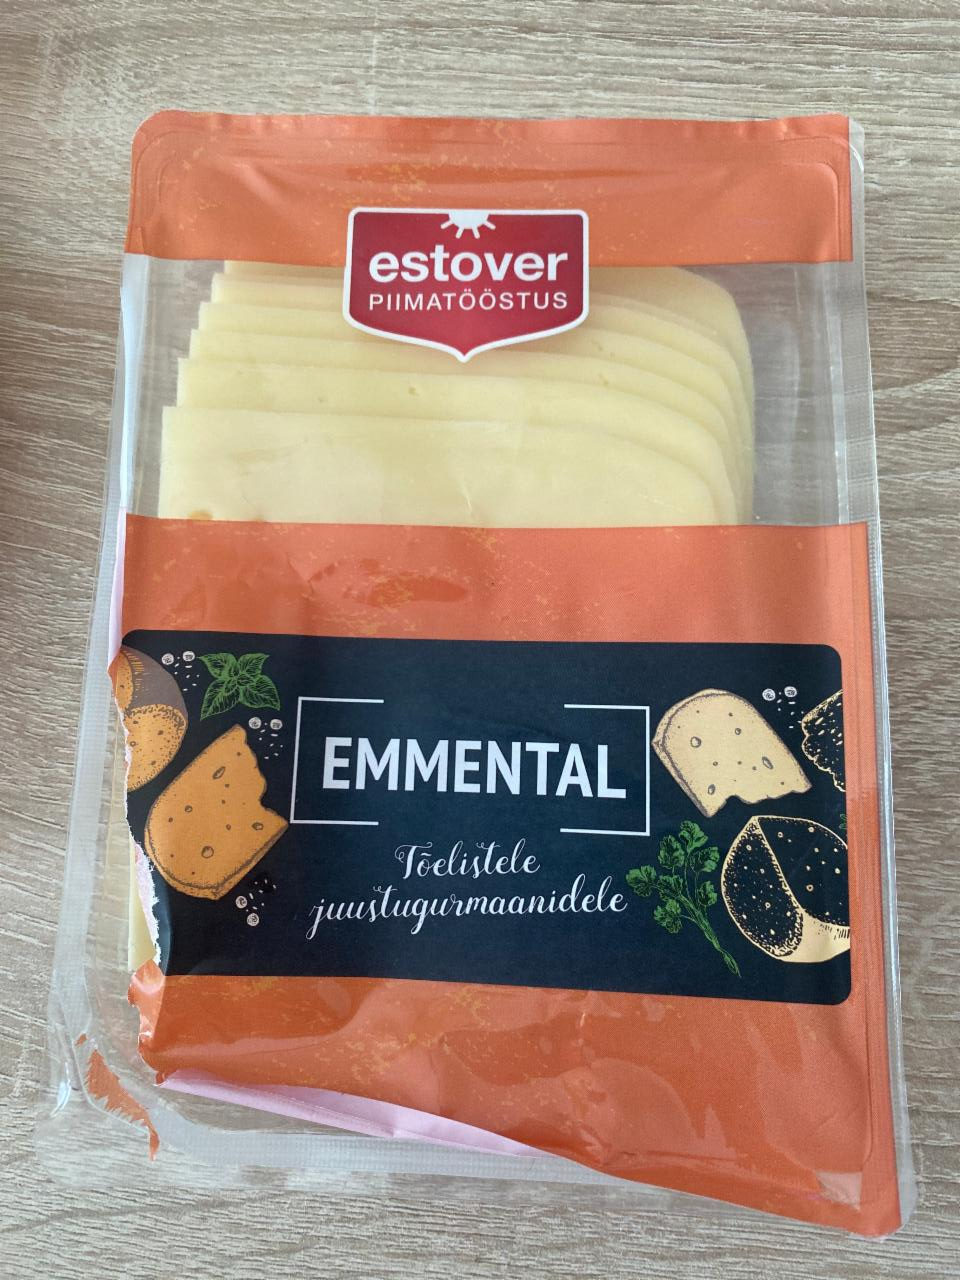 Фото - Эмменталь сыр Estover